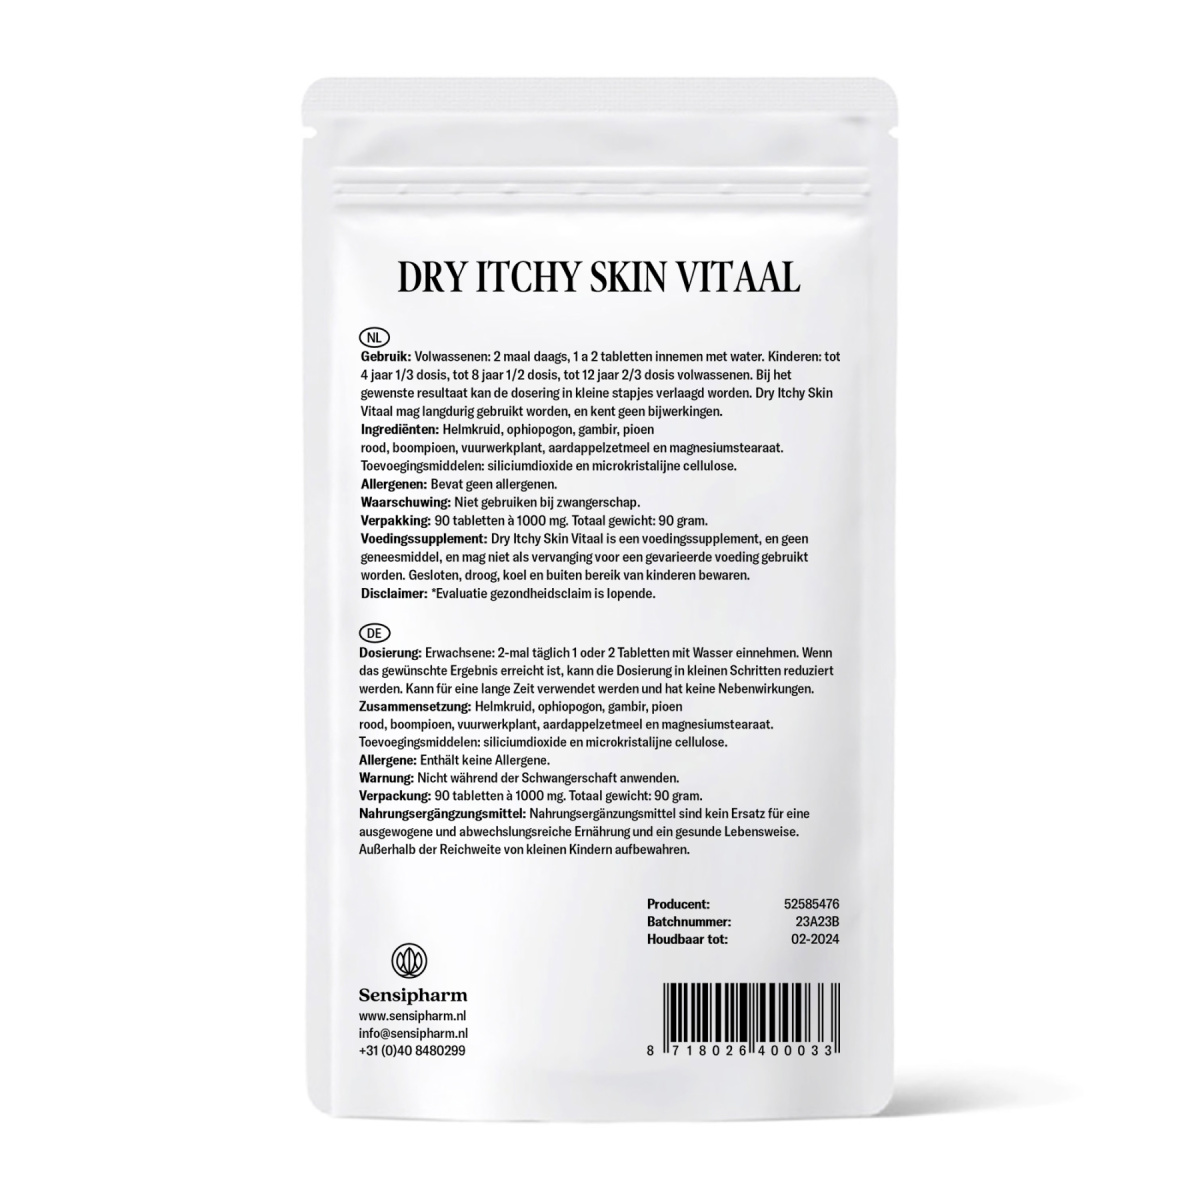 Dry Itchy Skin Vital - 1000 mg. 90 tabl.